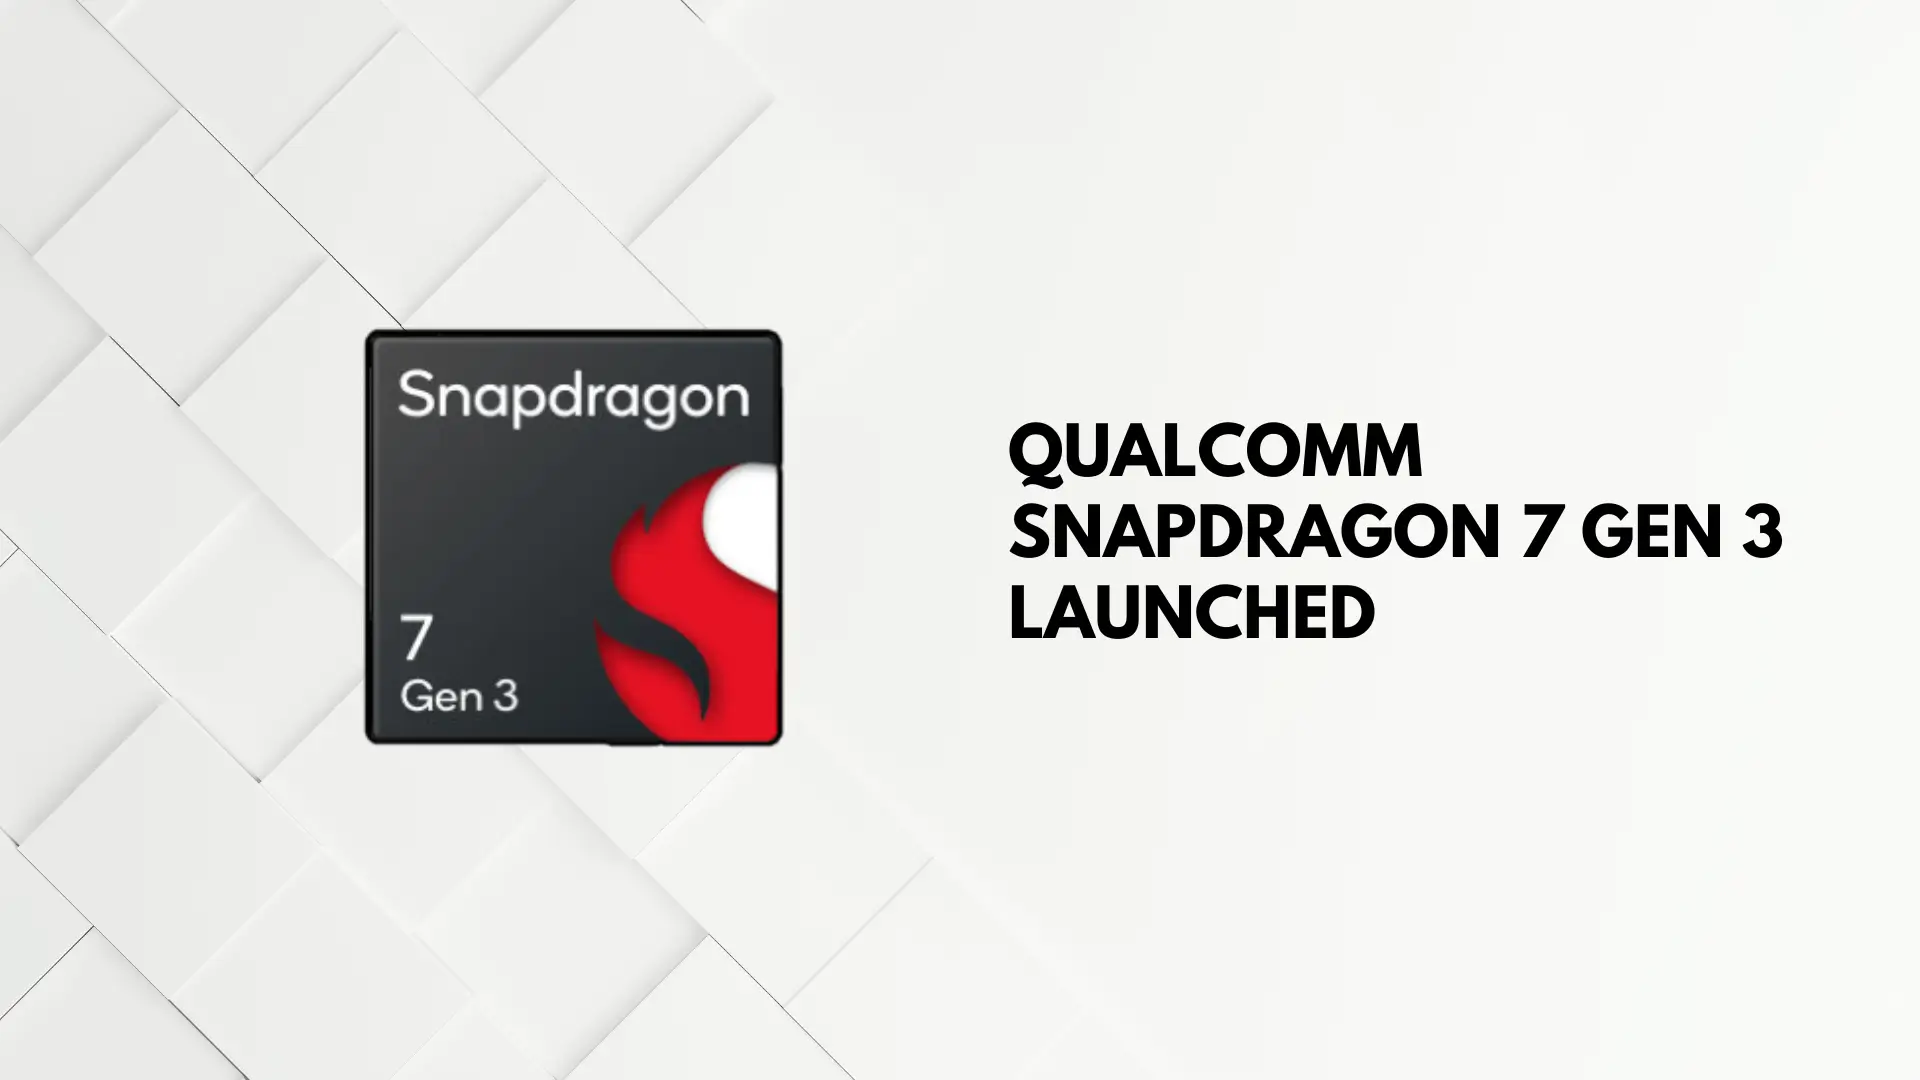 Qualcomm Snapdragon 7 Gen 3 launched